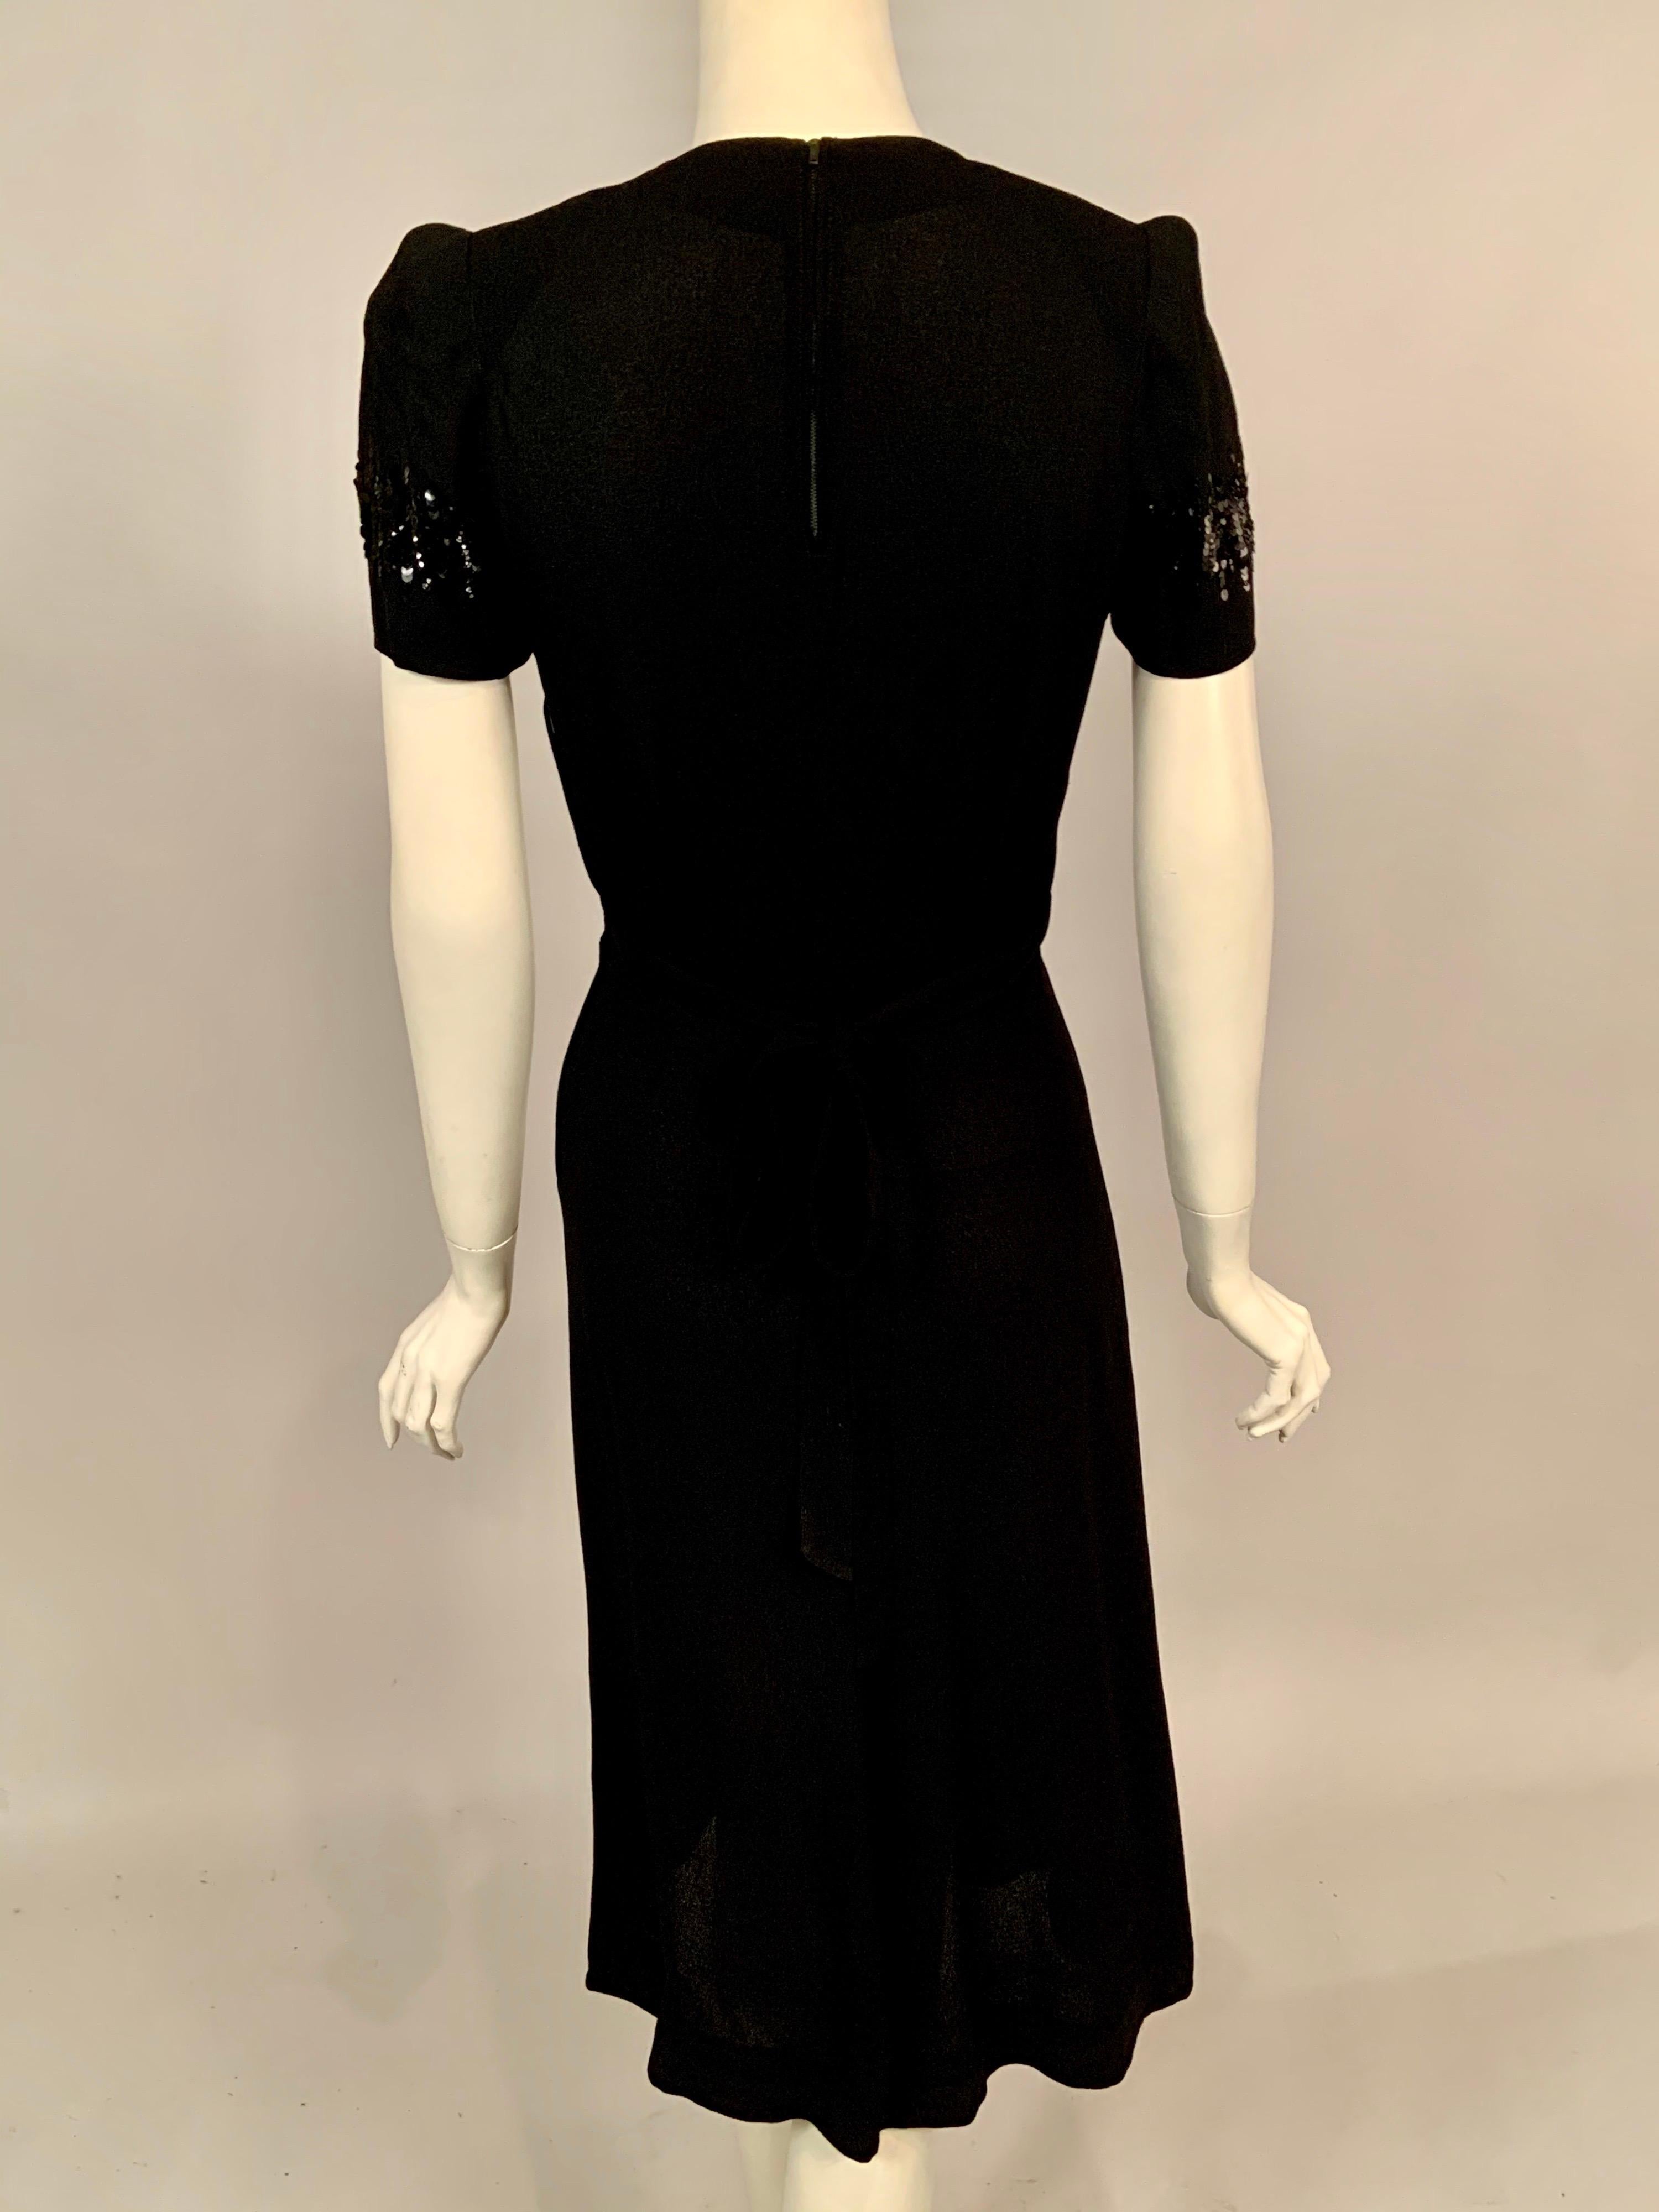 Women's 1940's Black Crepe Dress Elaborately Beaded Sheer Top For Sale